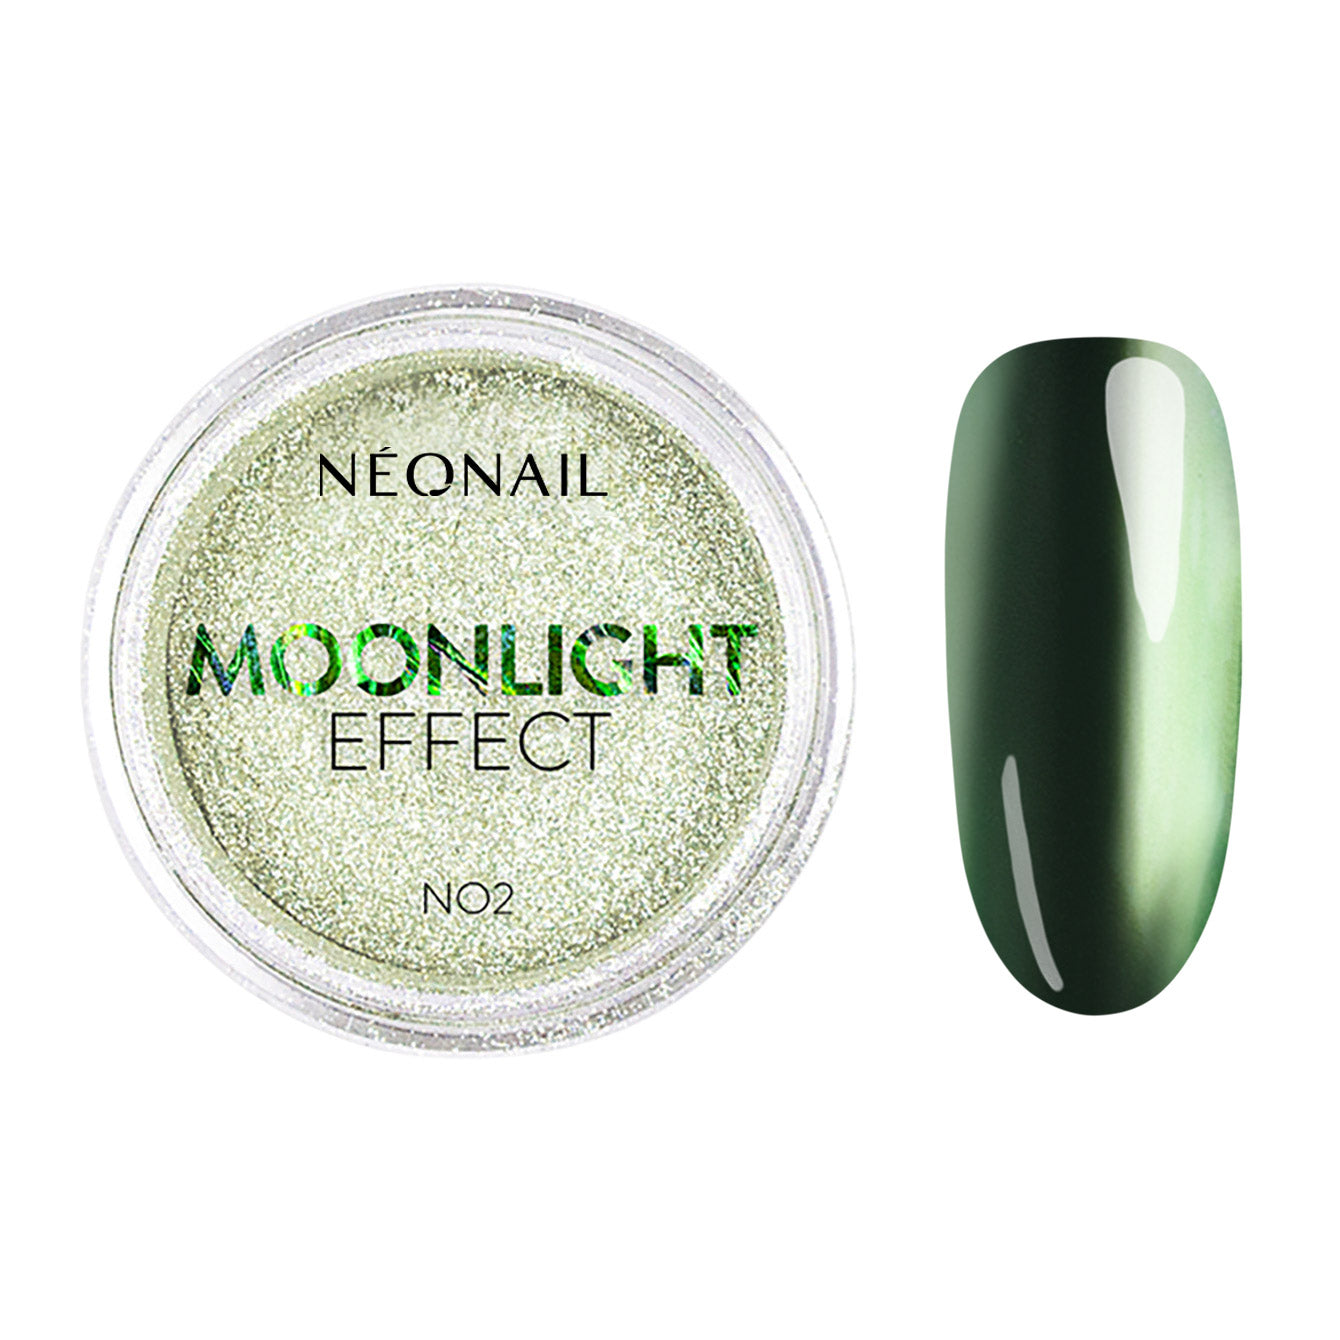 Neglepynt - Moonlight Effect 02 - 2g-Neglepynt-NeoNail-NR Kosmetik